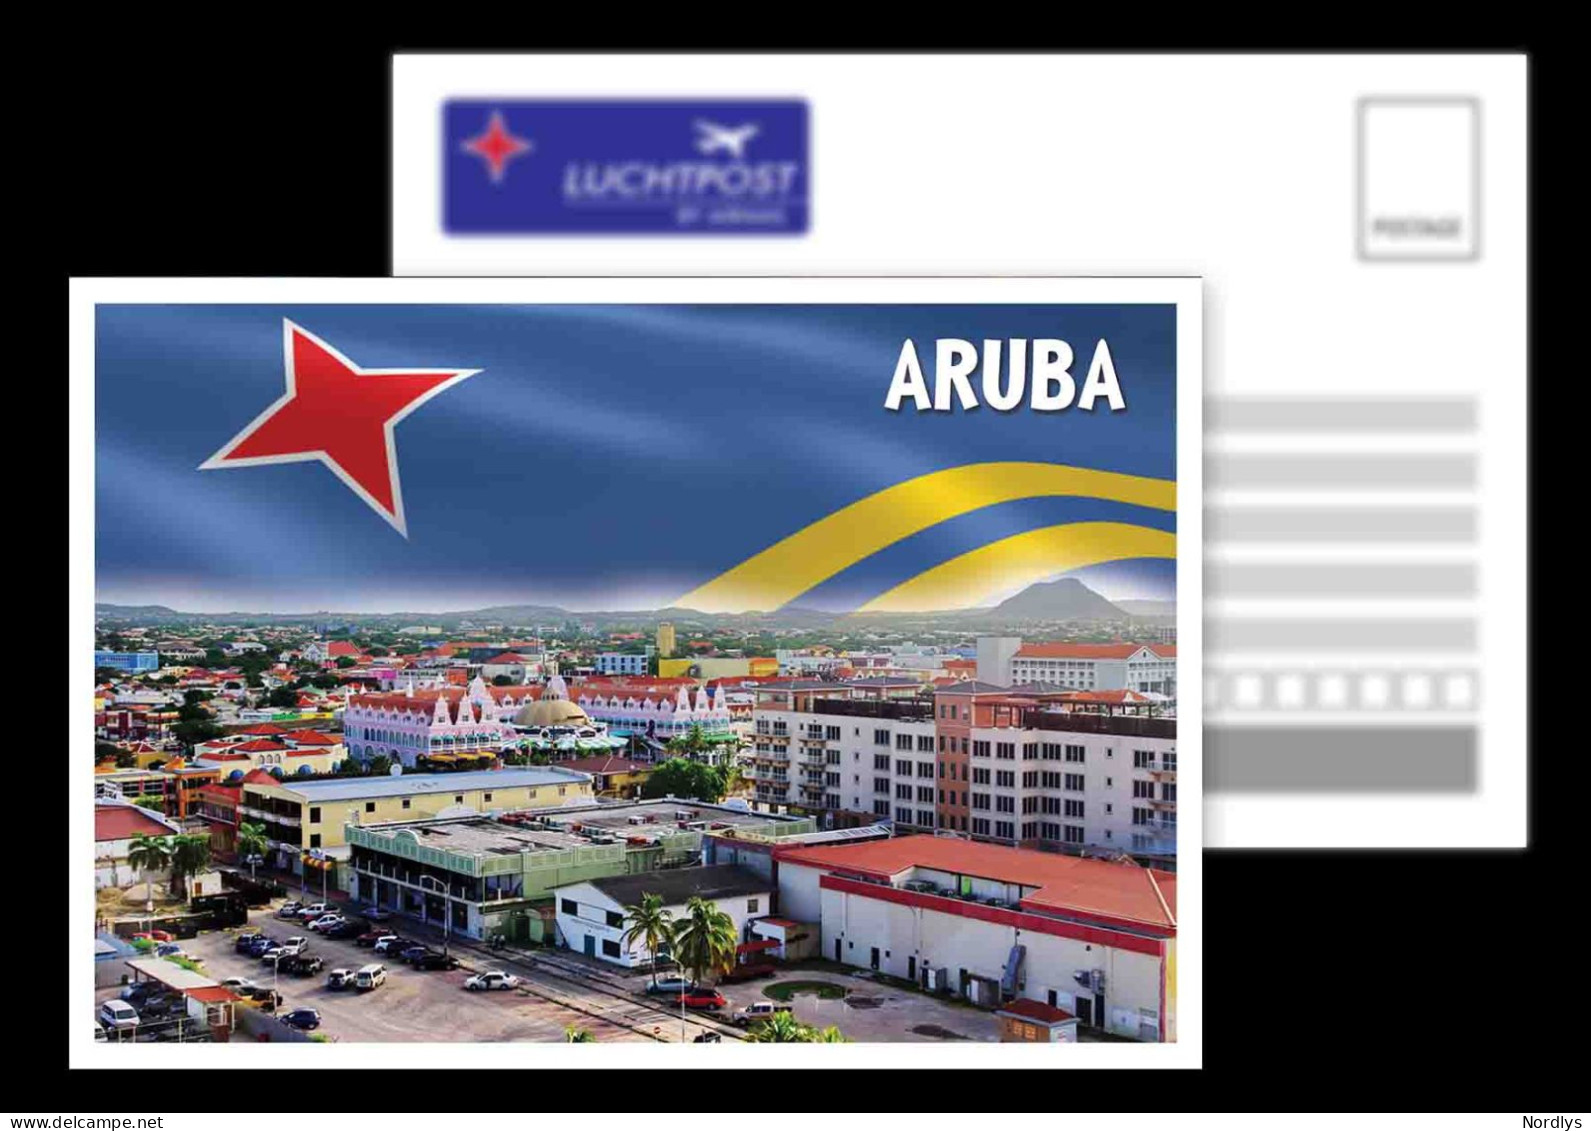 Aruba / Dutch Caribbean / Postcard /View Card - Aruba